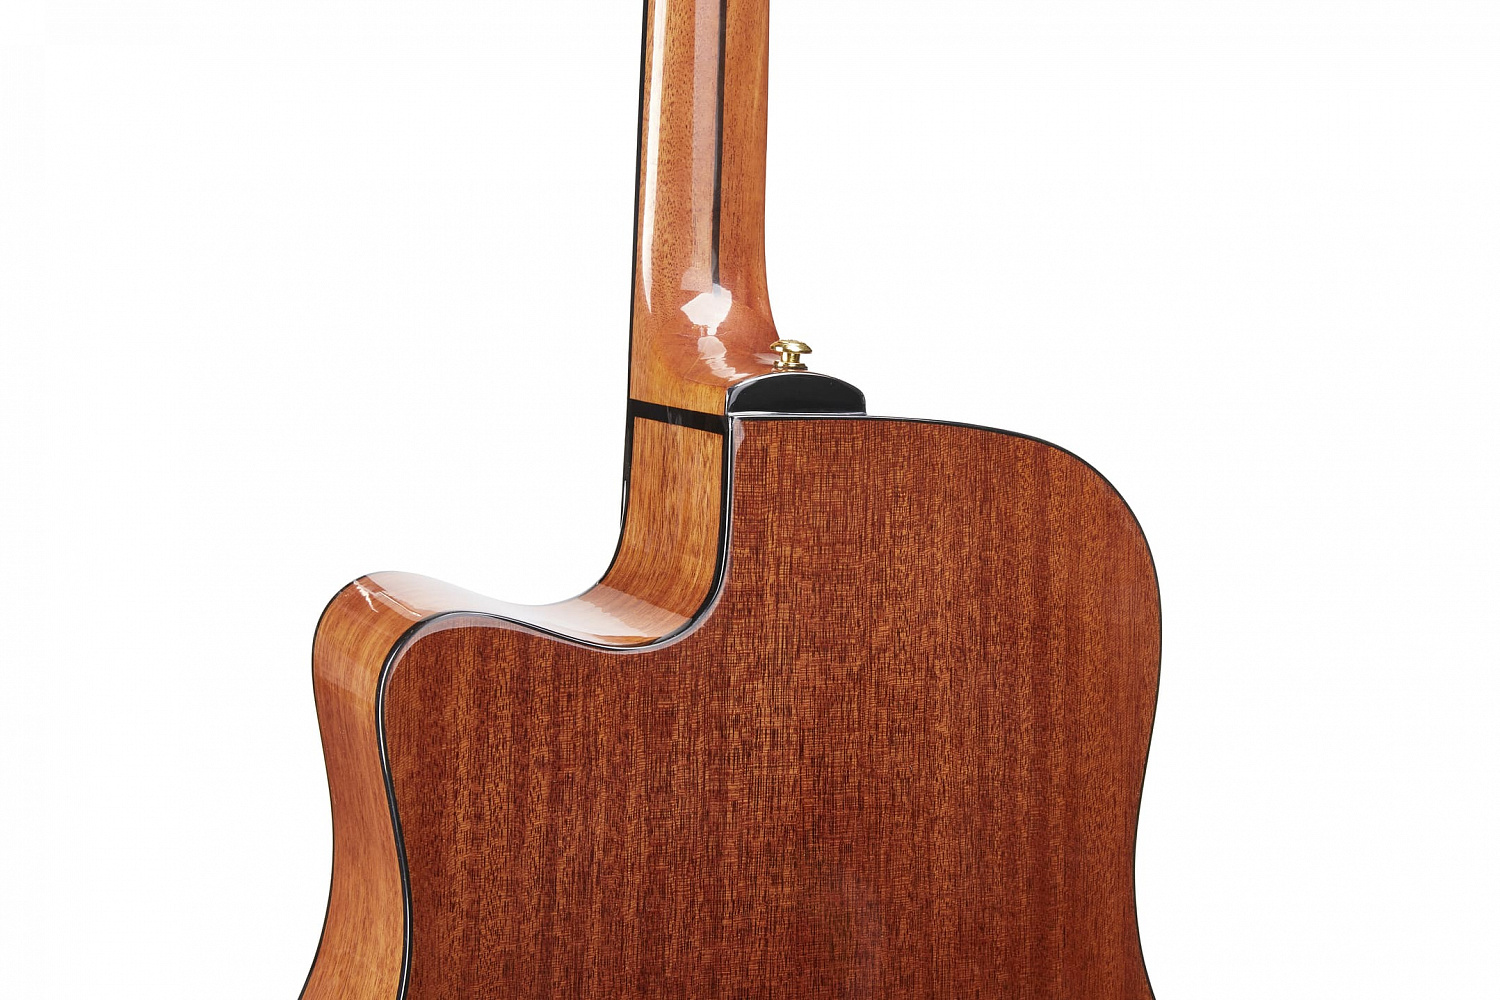 NG DM411SCE Peach электроакустическая гитара, цвет санберст, чехол в комплекте